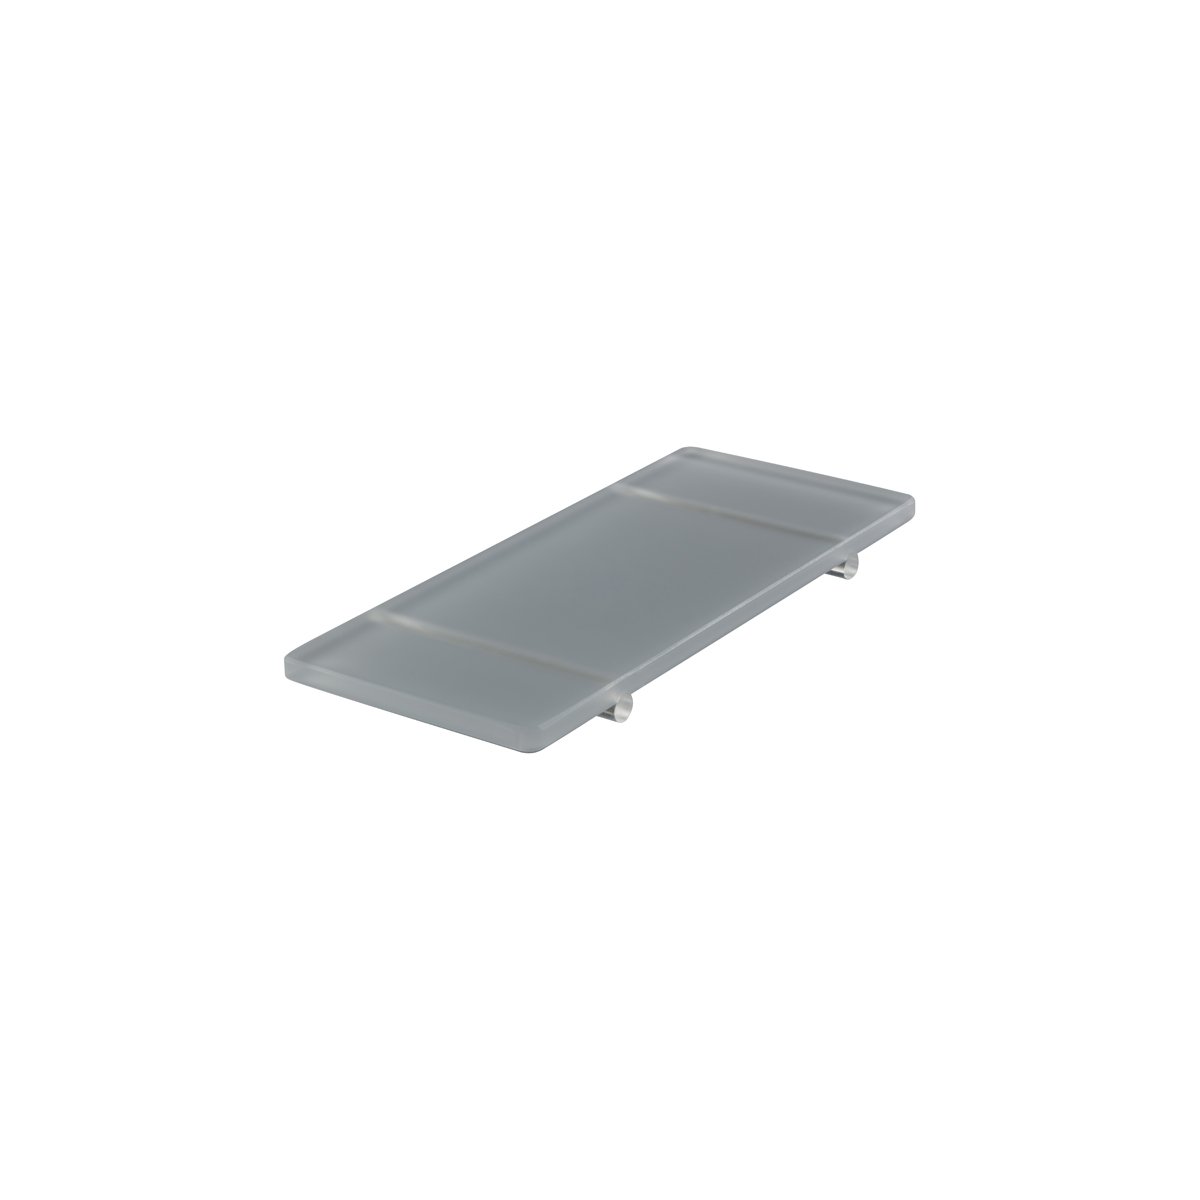 MLP118988 Mealplak Footed Tray Concrete 245x100x15mm Tomkin Australia Hospitality Supplies